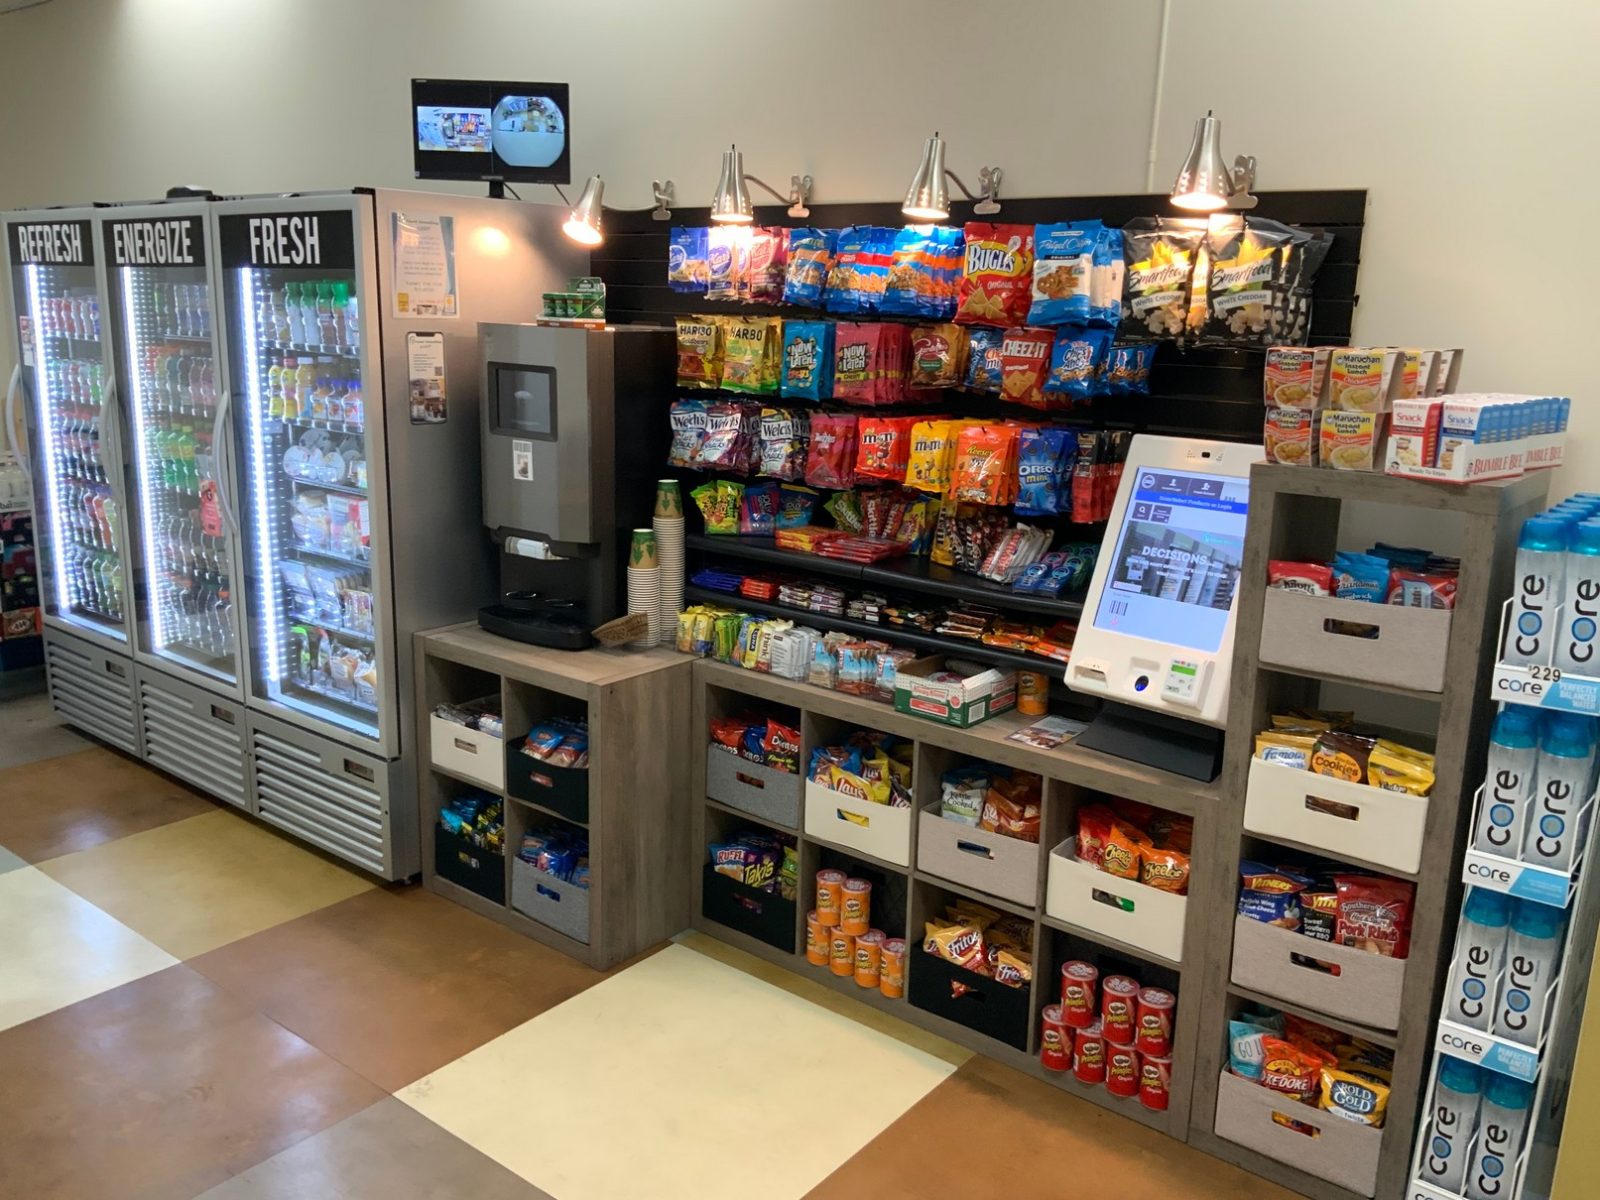 Chicago Self-Checkout Kiosk | Snacks & Beverages | Convenient Micro-Market